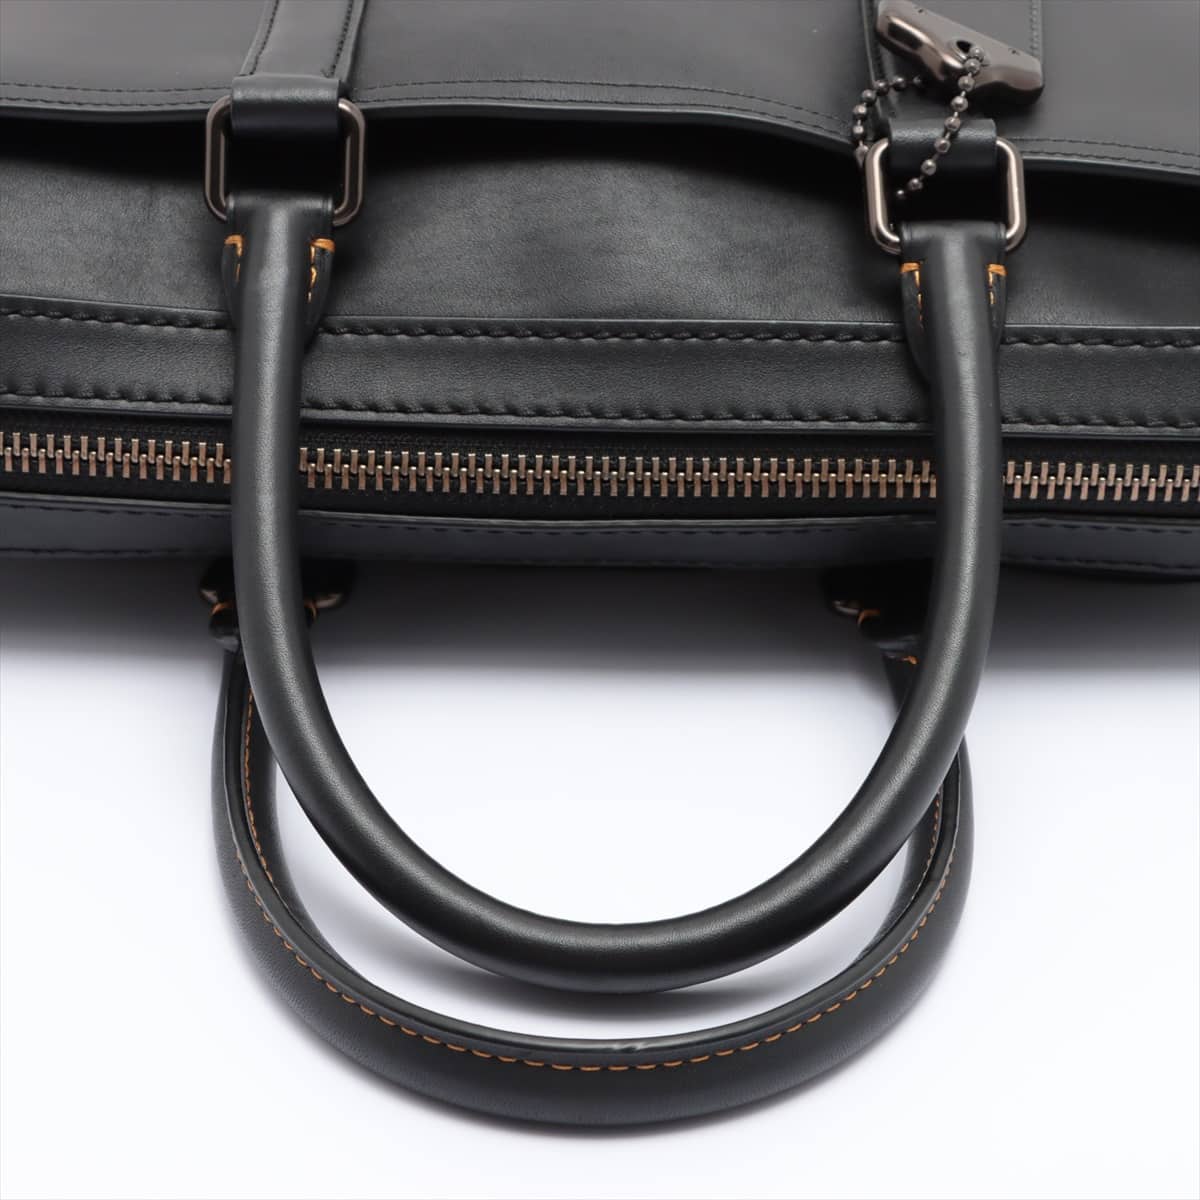 COACH Metropolitan Slim Leather 2WAY Businessbag Black